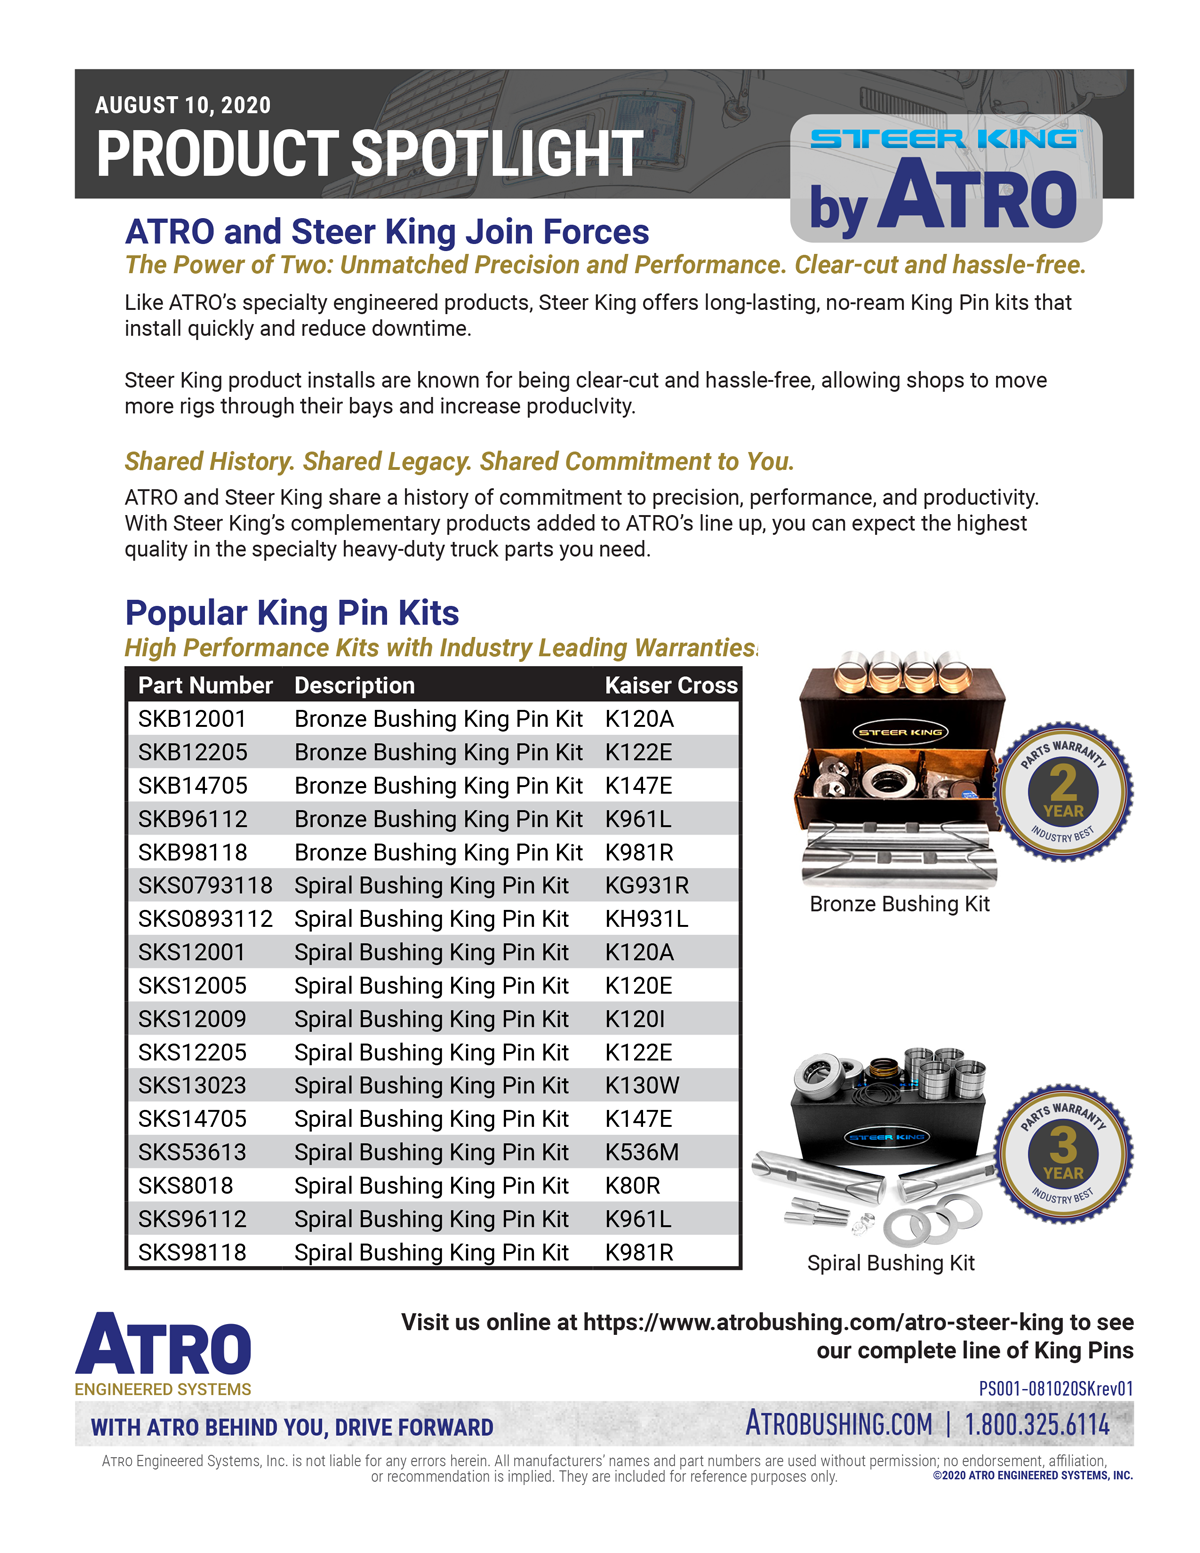 ATRO Steer King Product Spotlight